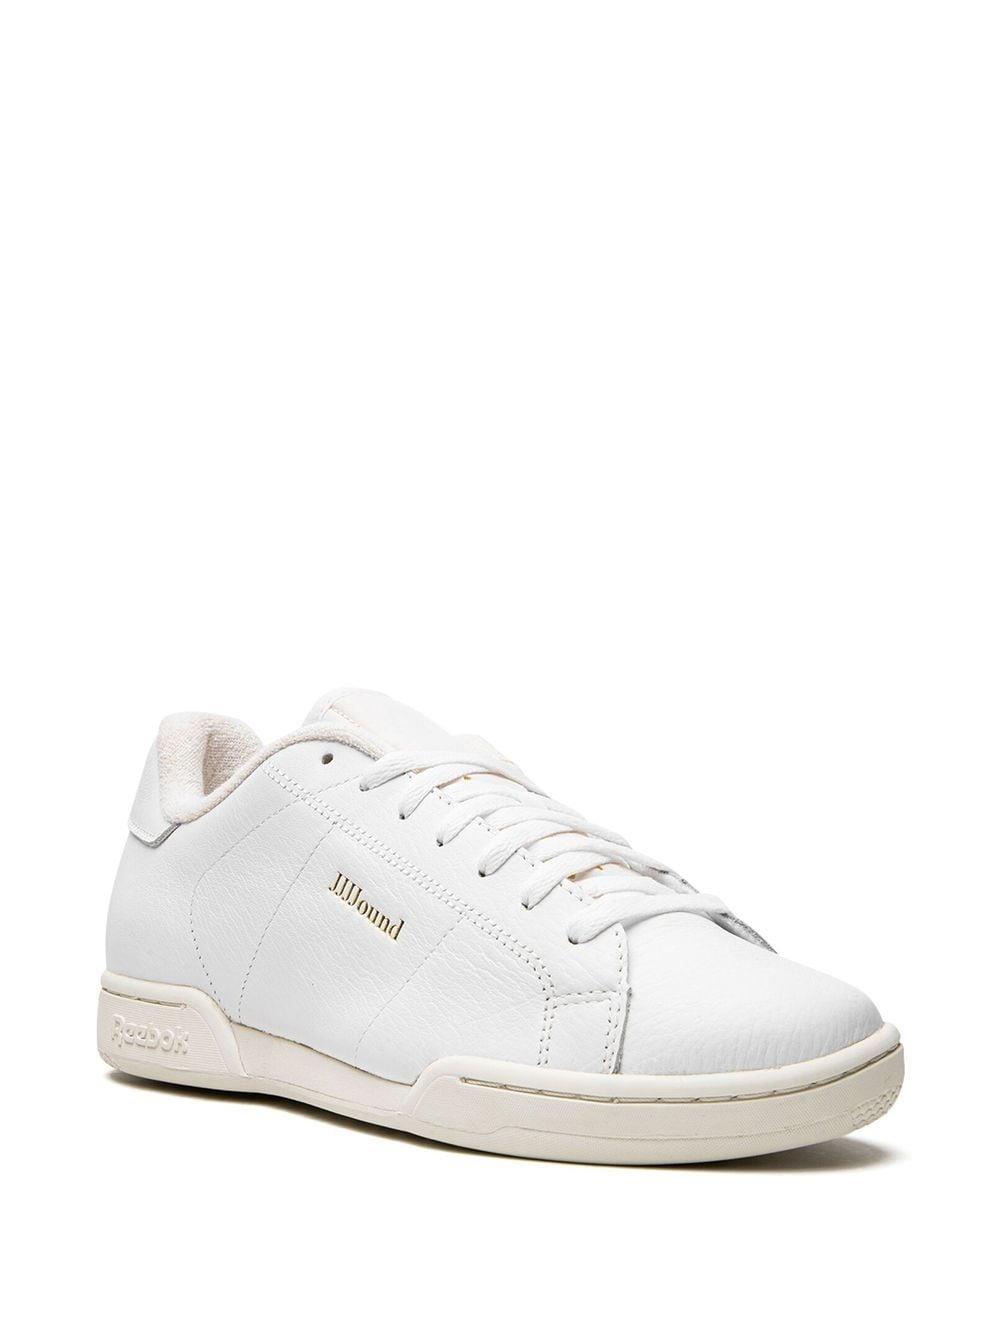 Reebok x JJJJound NPC II sneakers - White